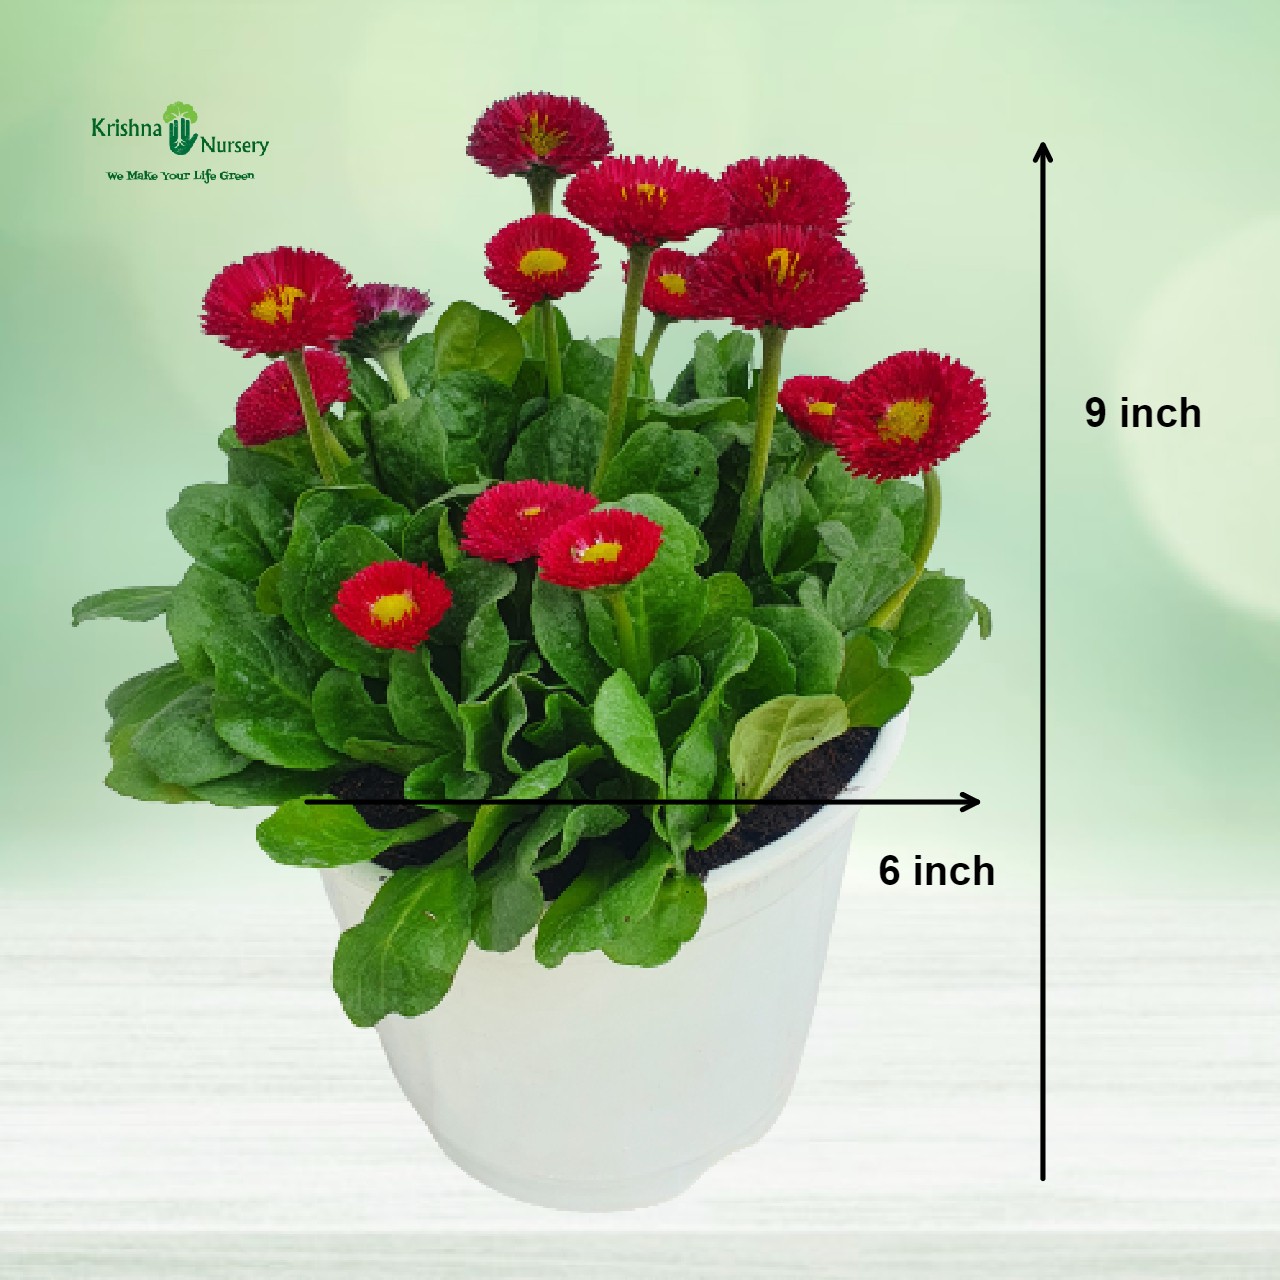 bellis-plant-red-flower